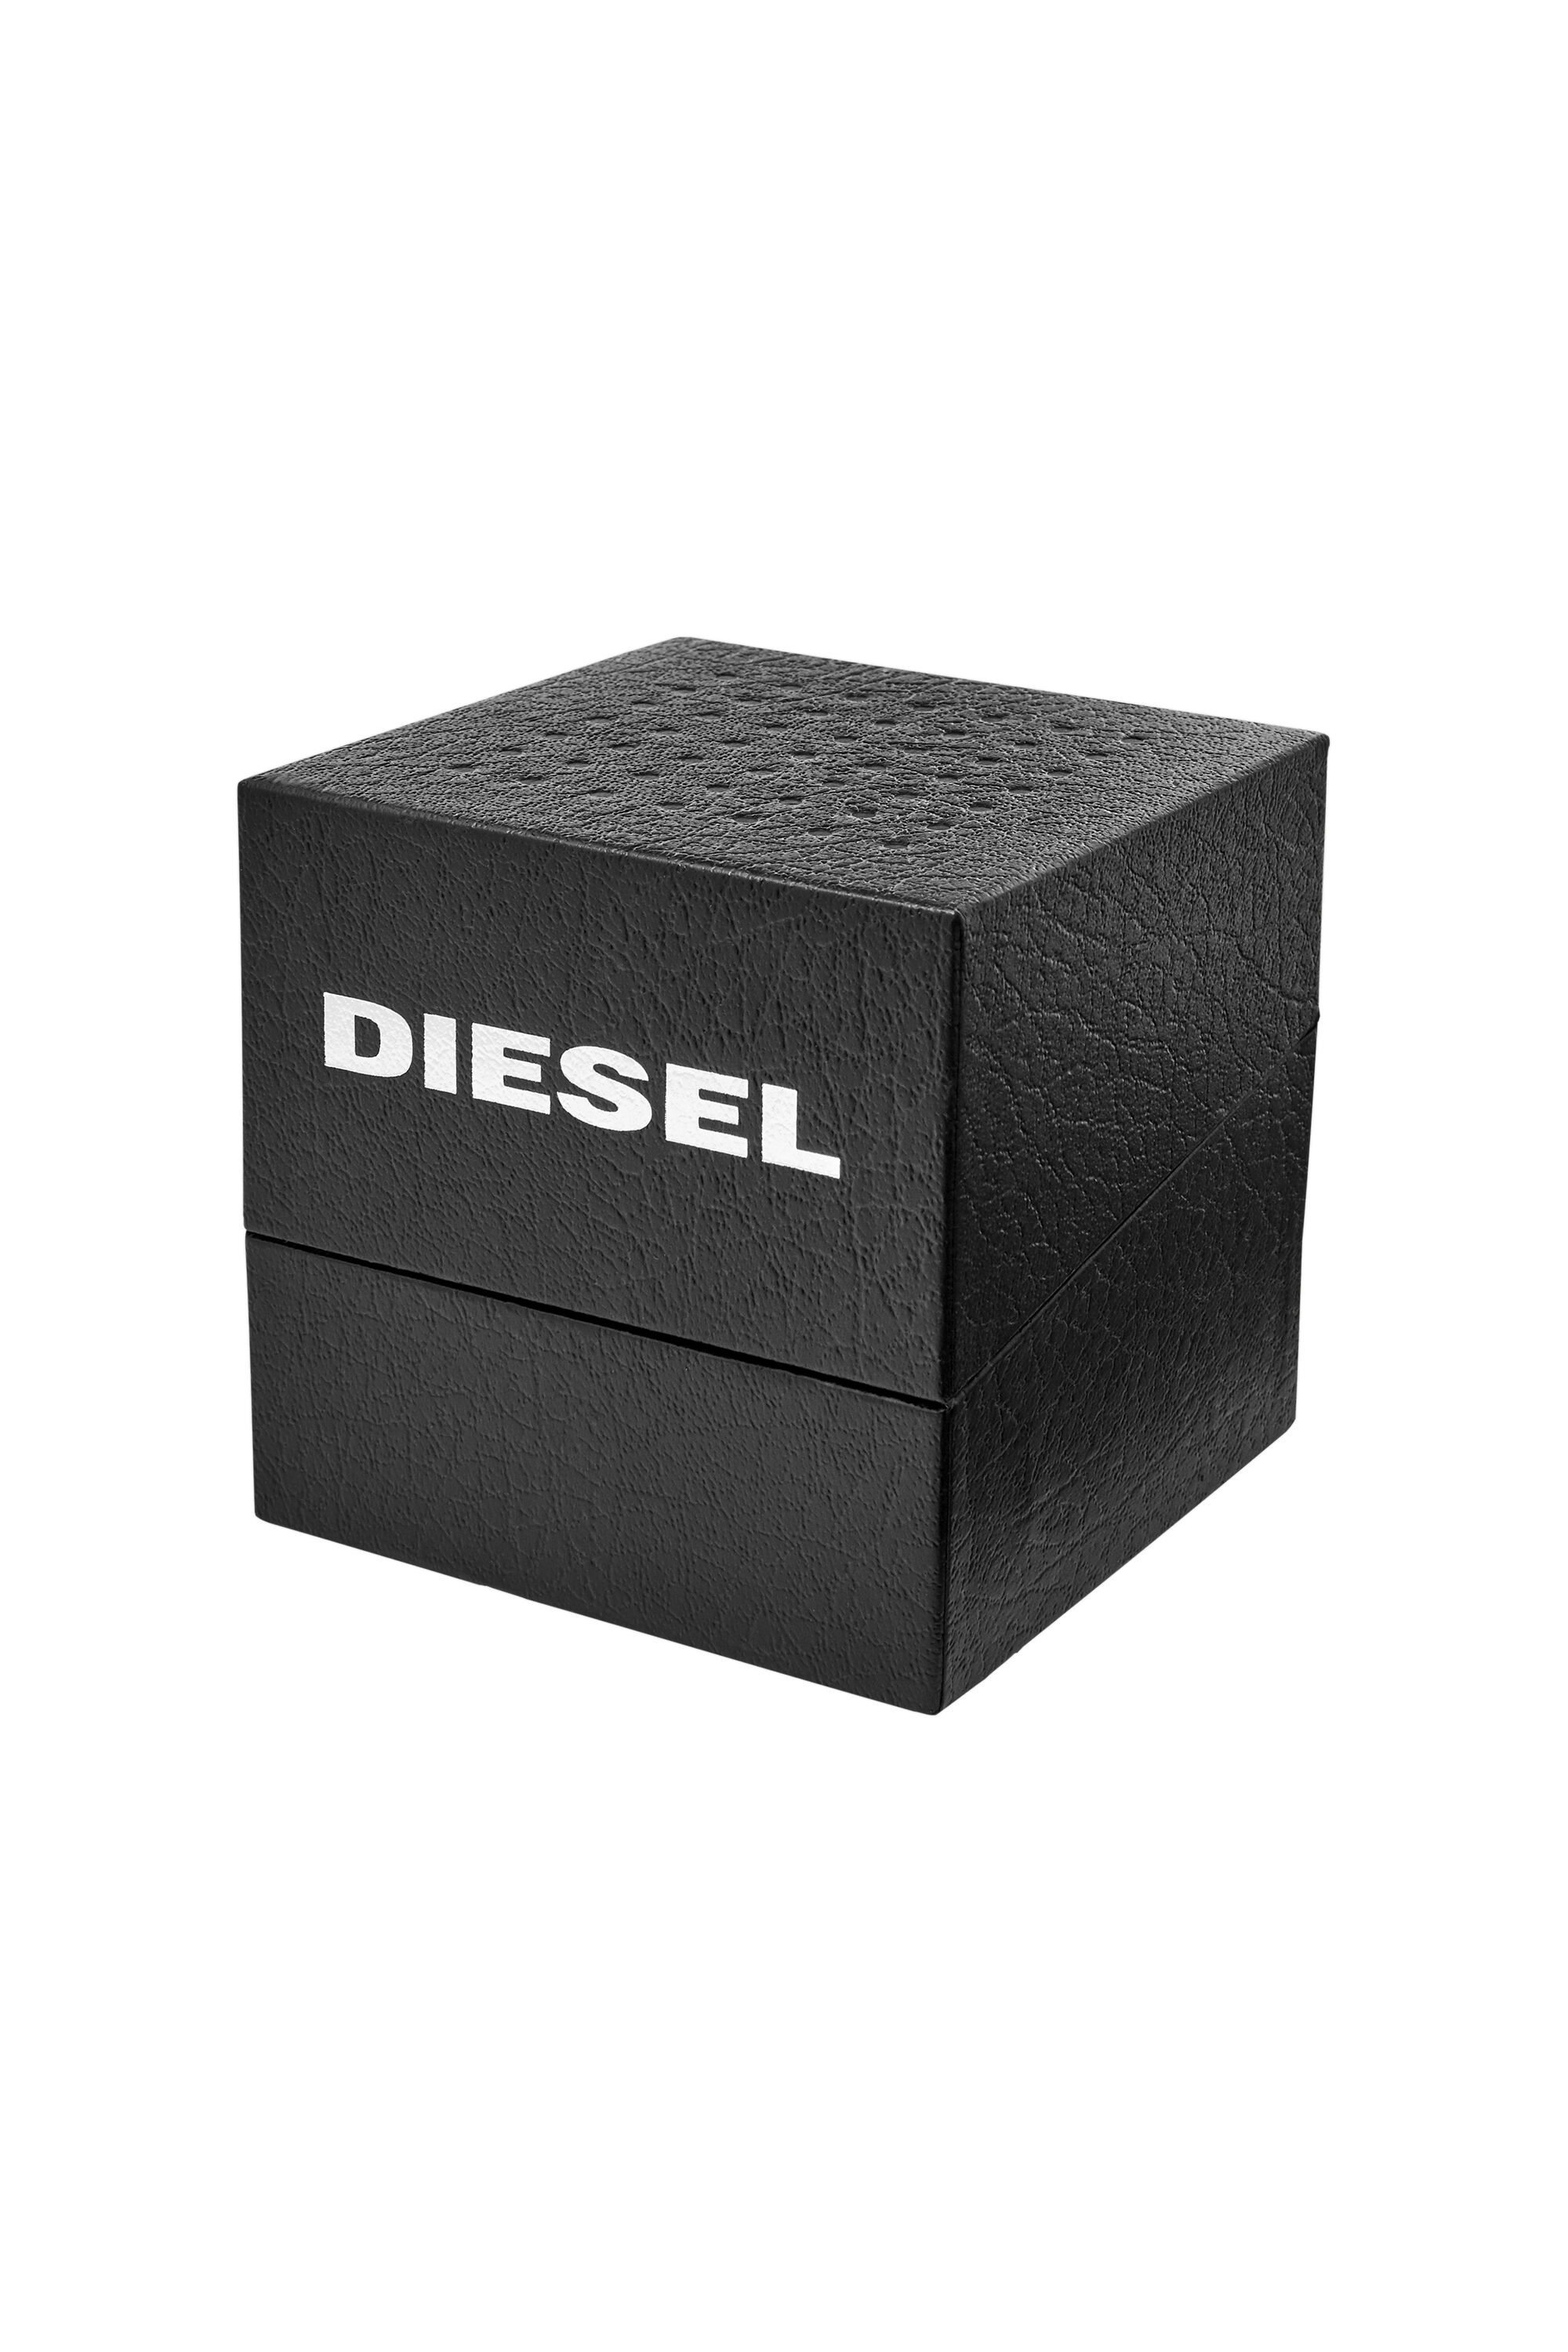 Diesel - DZ1907, Black - Image 5